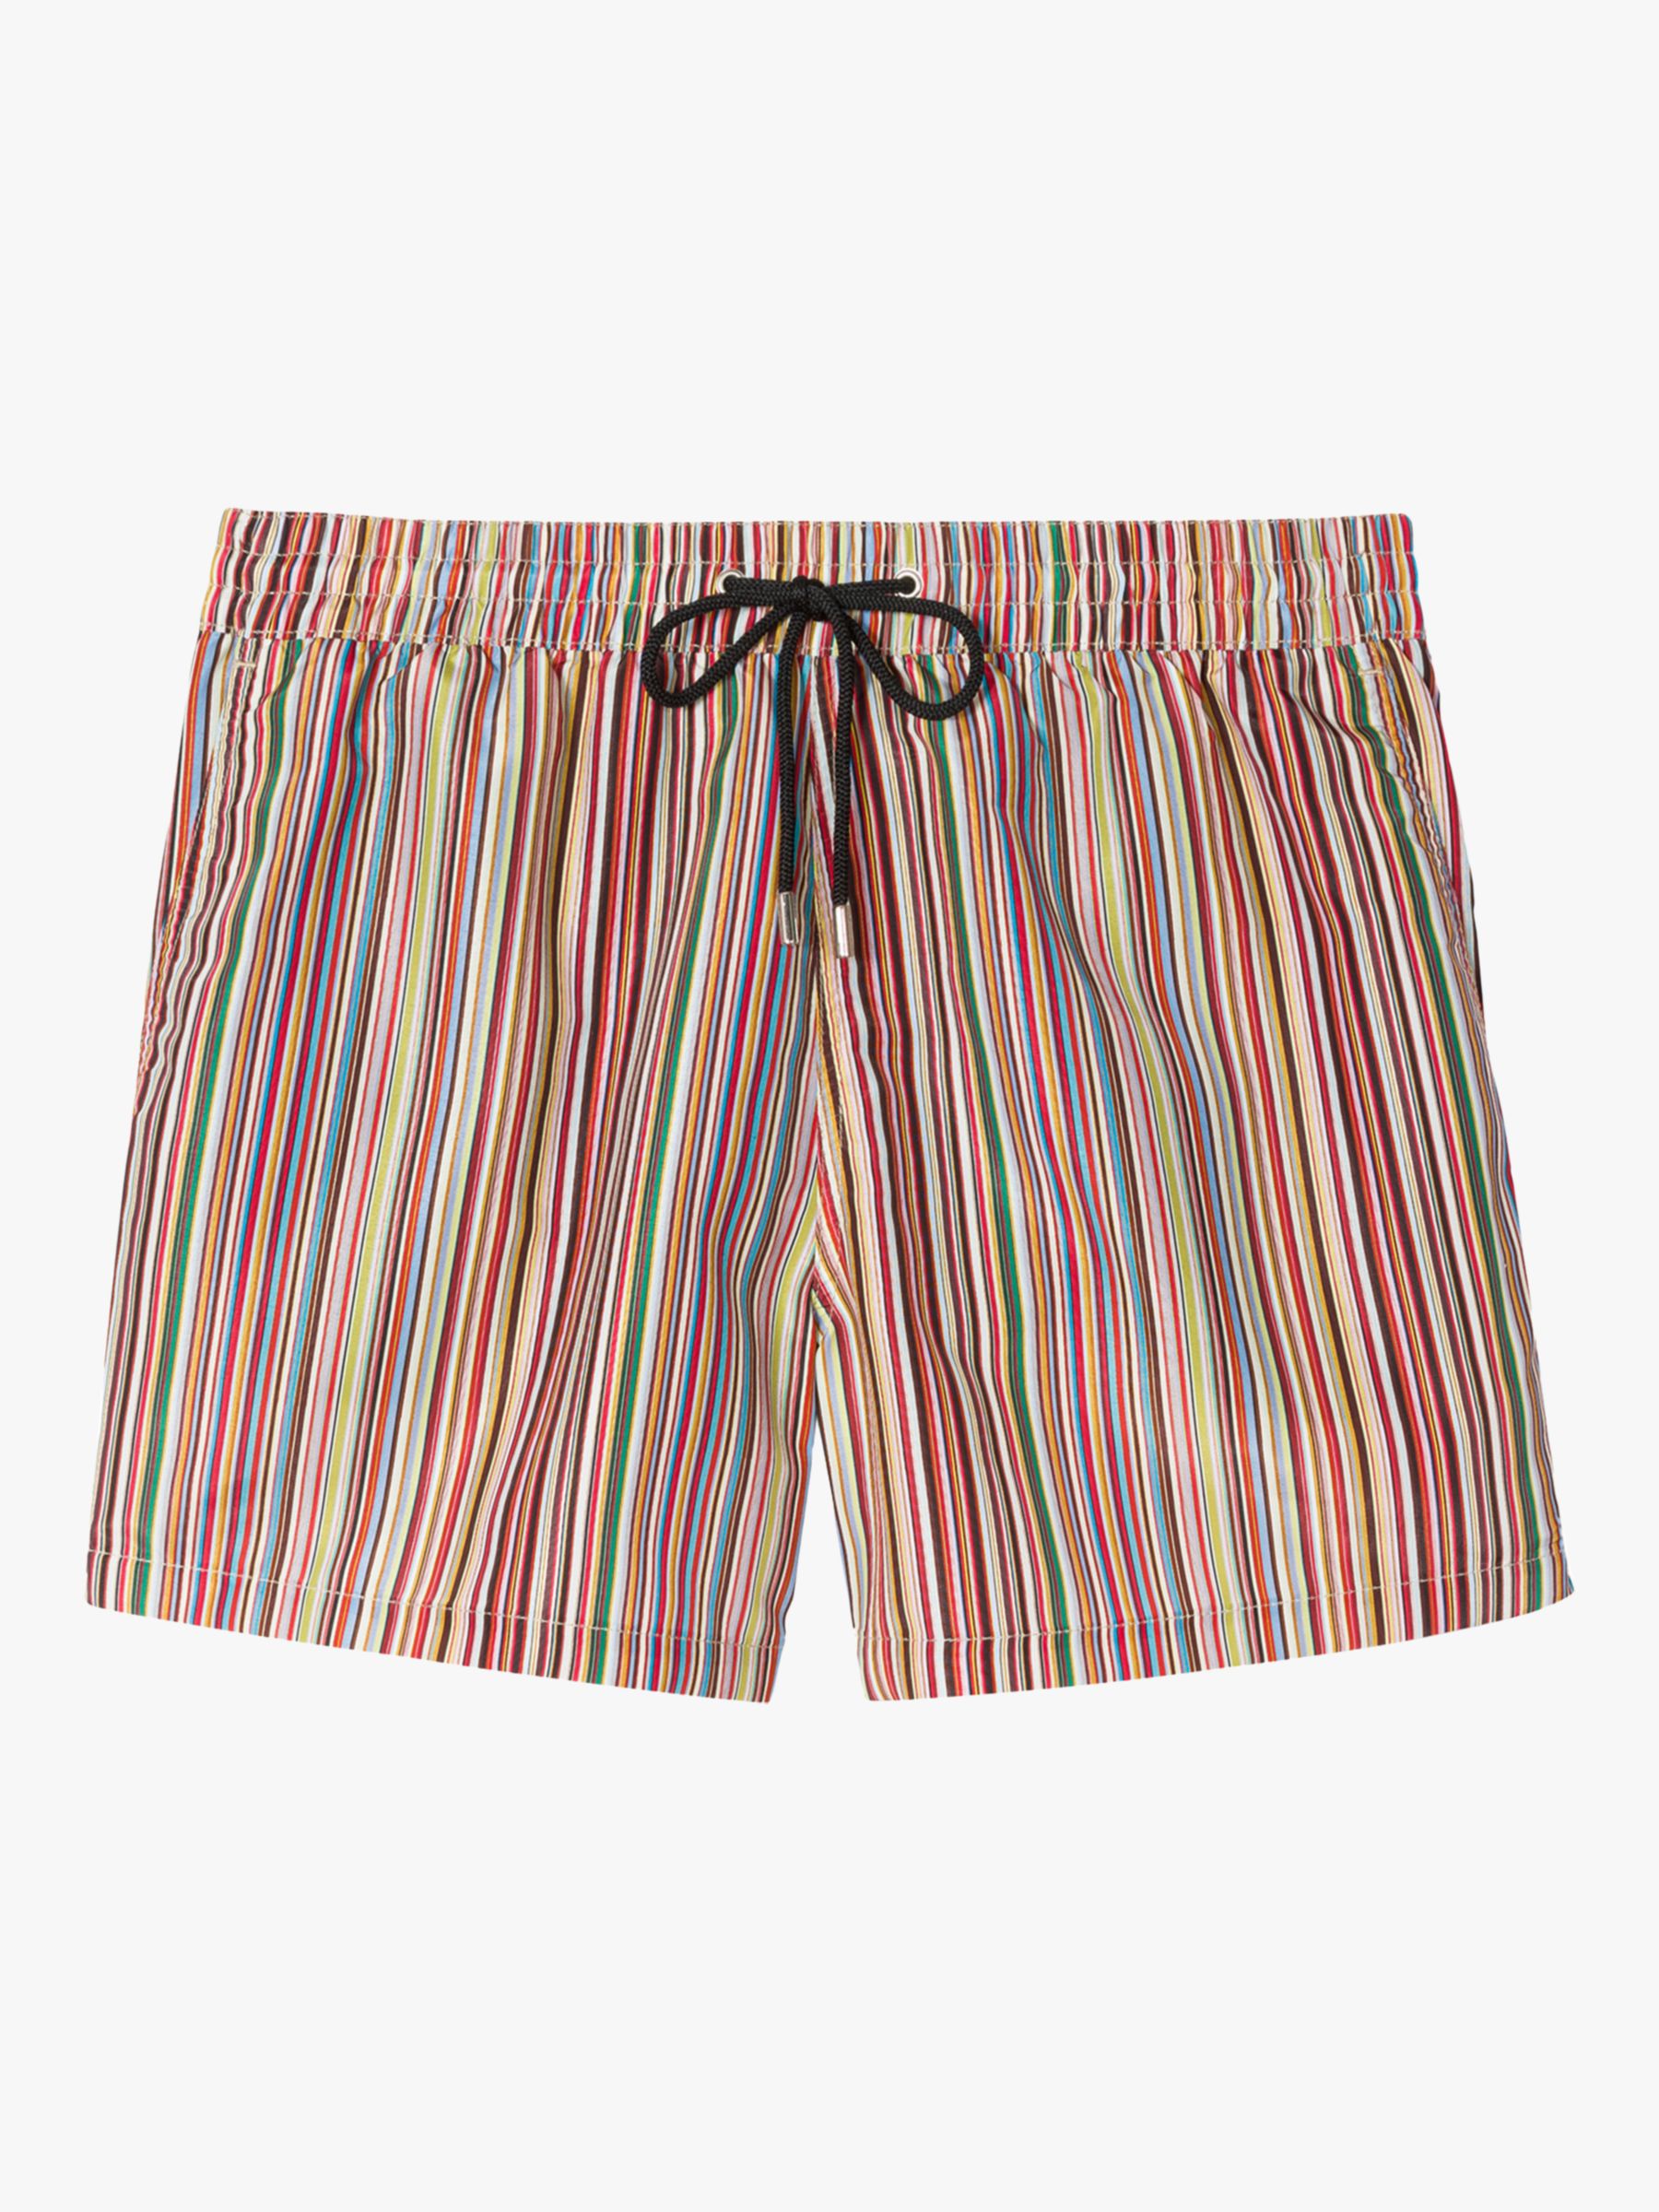 Buy Paul Smith Classic Stripe Swim Shorts, Multi Online at johnlewis.com